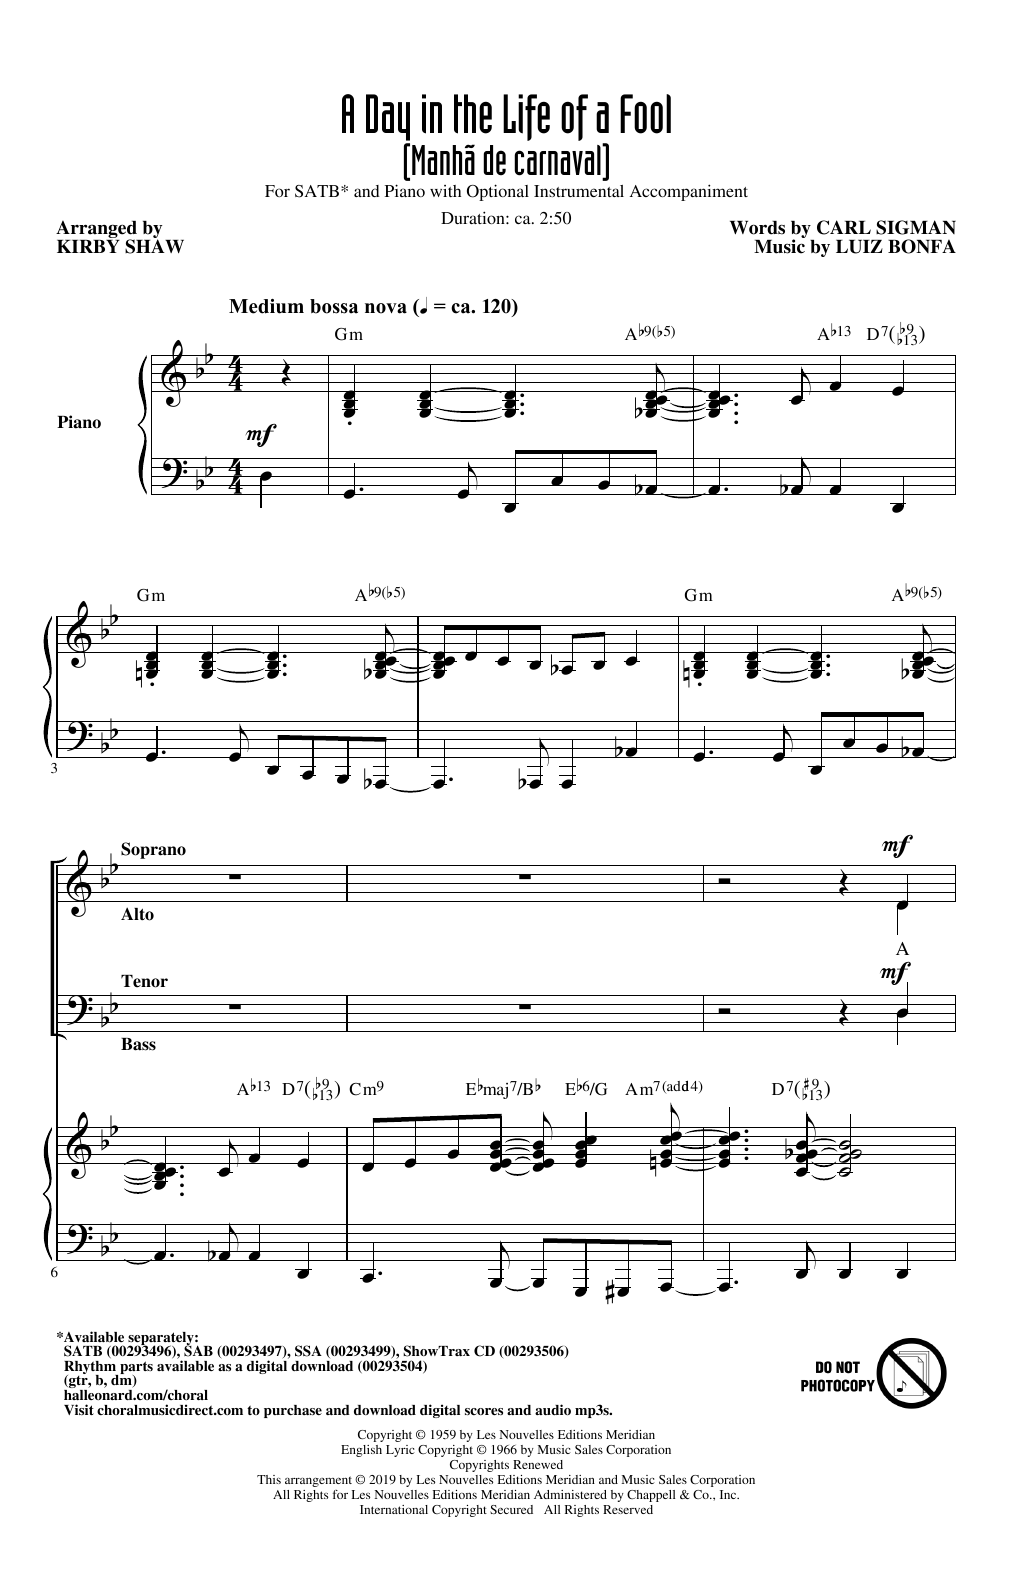 Carl Sigman & Luiz Bonfa A Day In The Life Of A Fool (Manha De Carnaval) (arr. Kirby Shaw) Sheet Music Notes & Chords for SAB Choir - Download or Print PDF